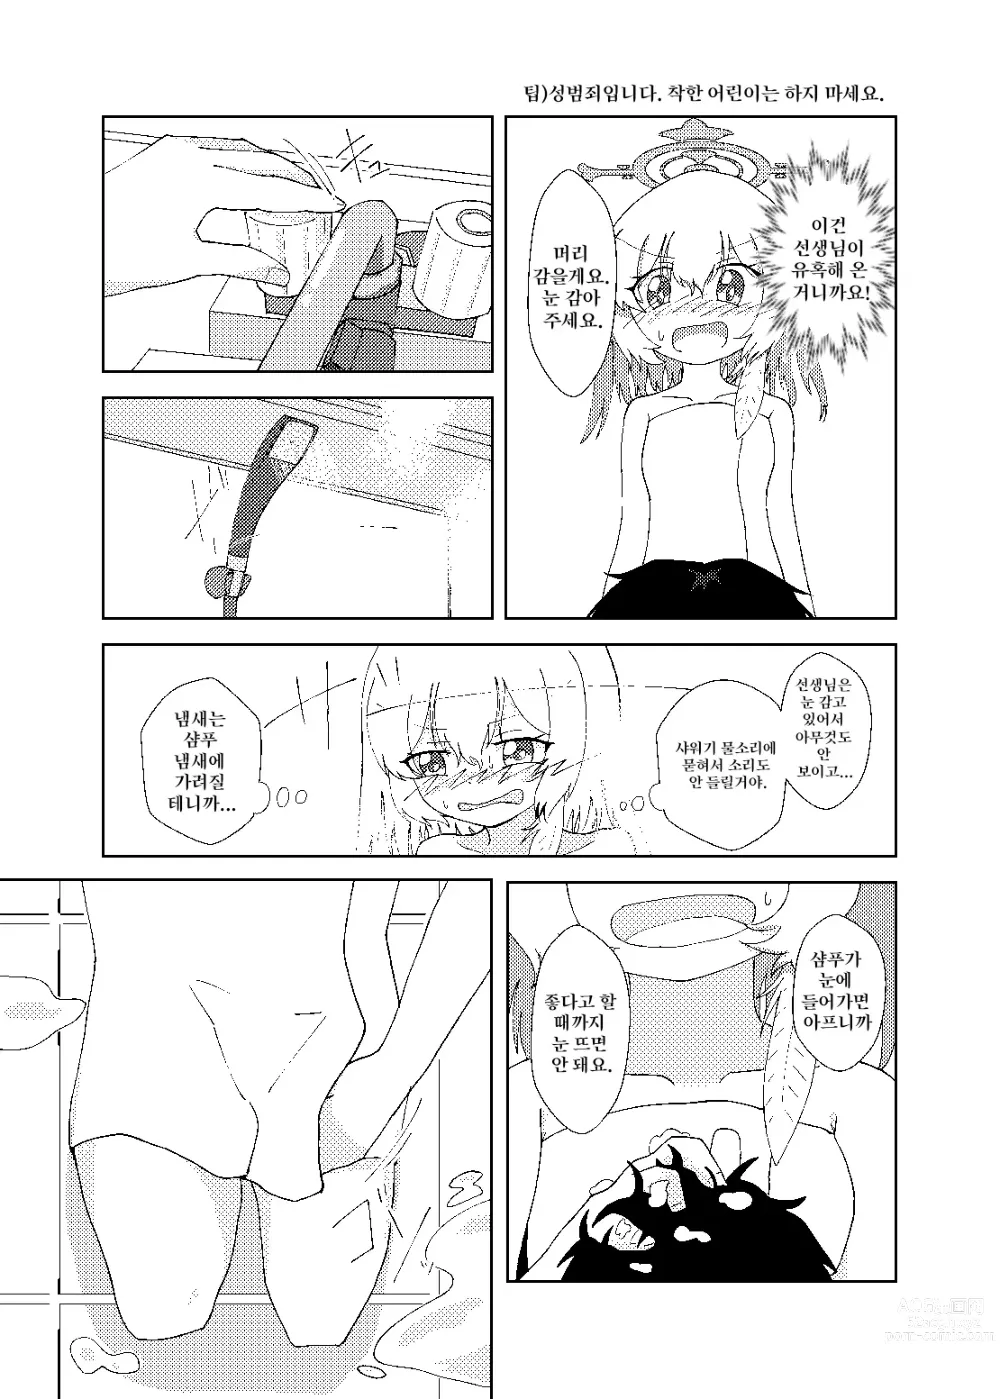 Page 13 of doujinshi 세리나가 유아화 선생님을 간호하는 이야기